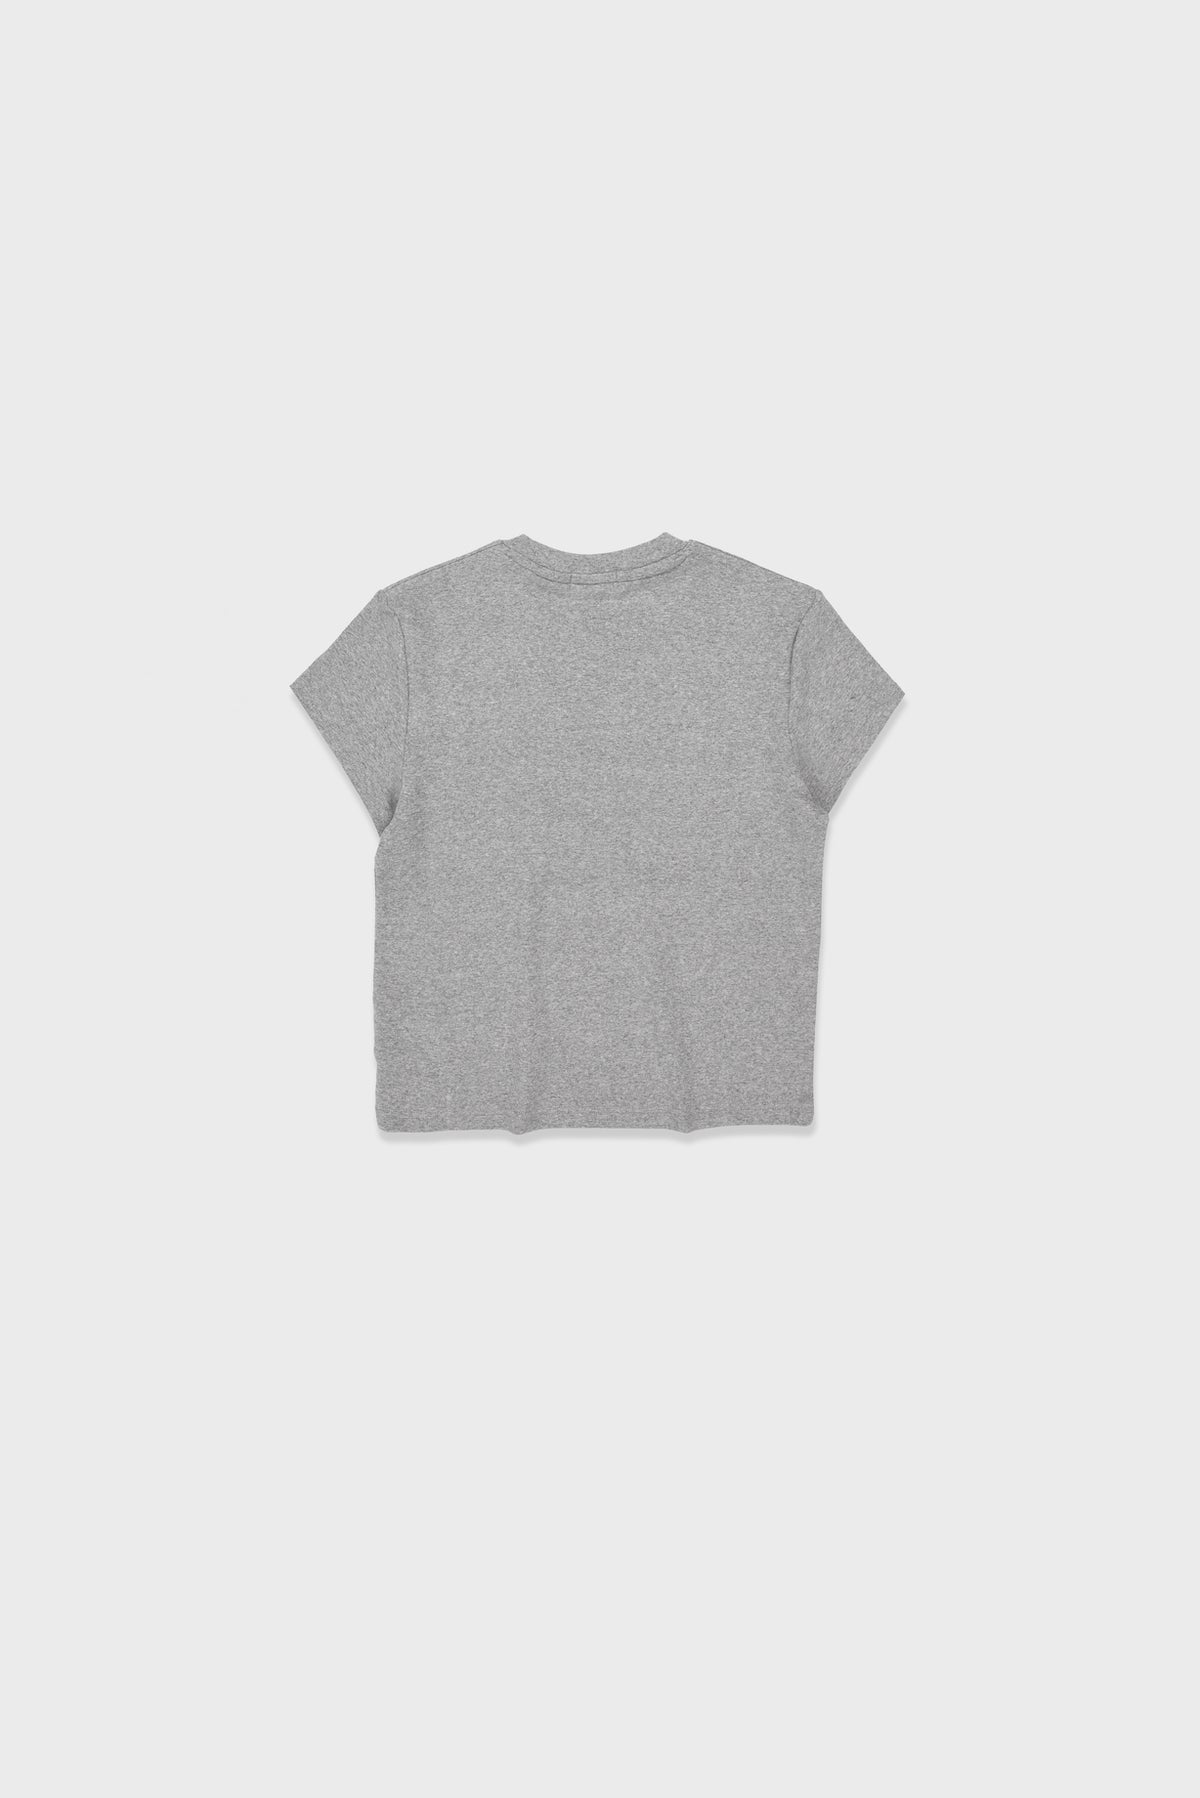 WMM Small Logo T Shirt In Gray